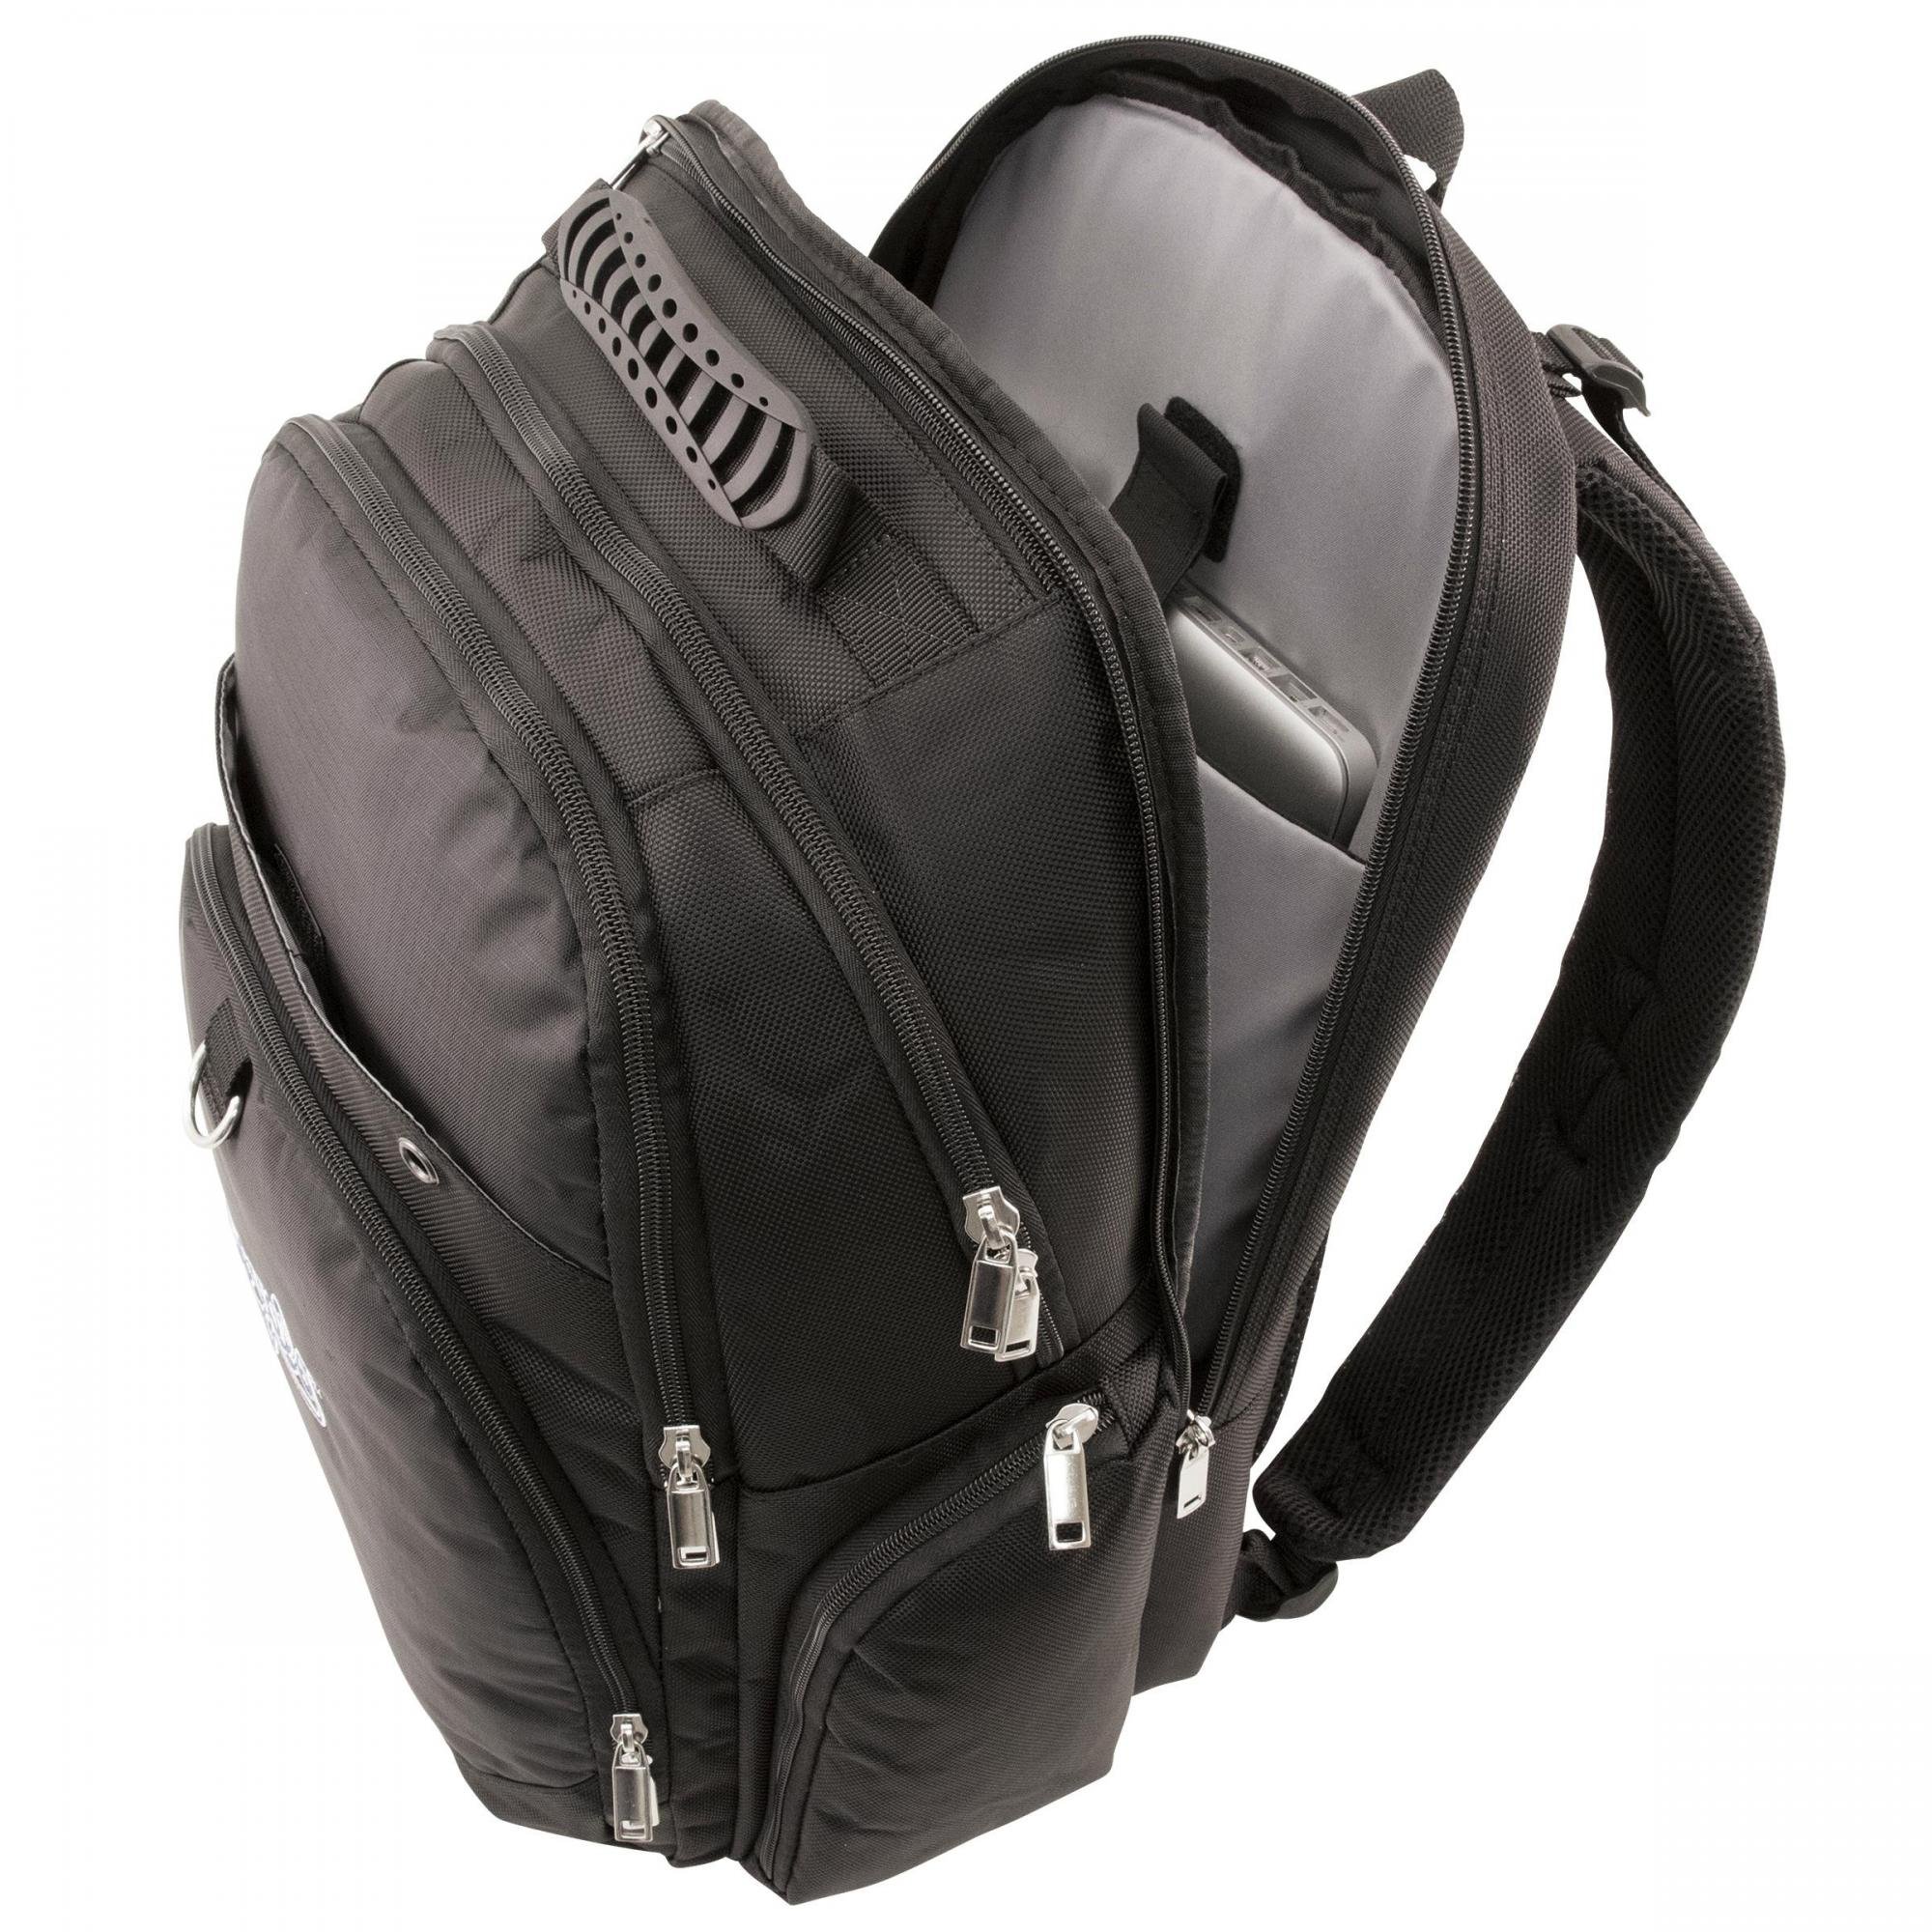 Mercury Luggage Backpack Pro Travel Deluxe Black